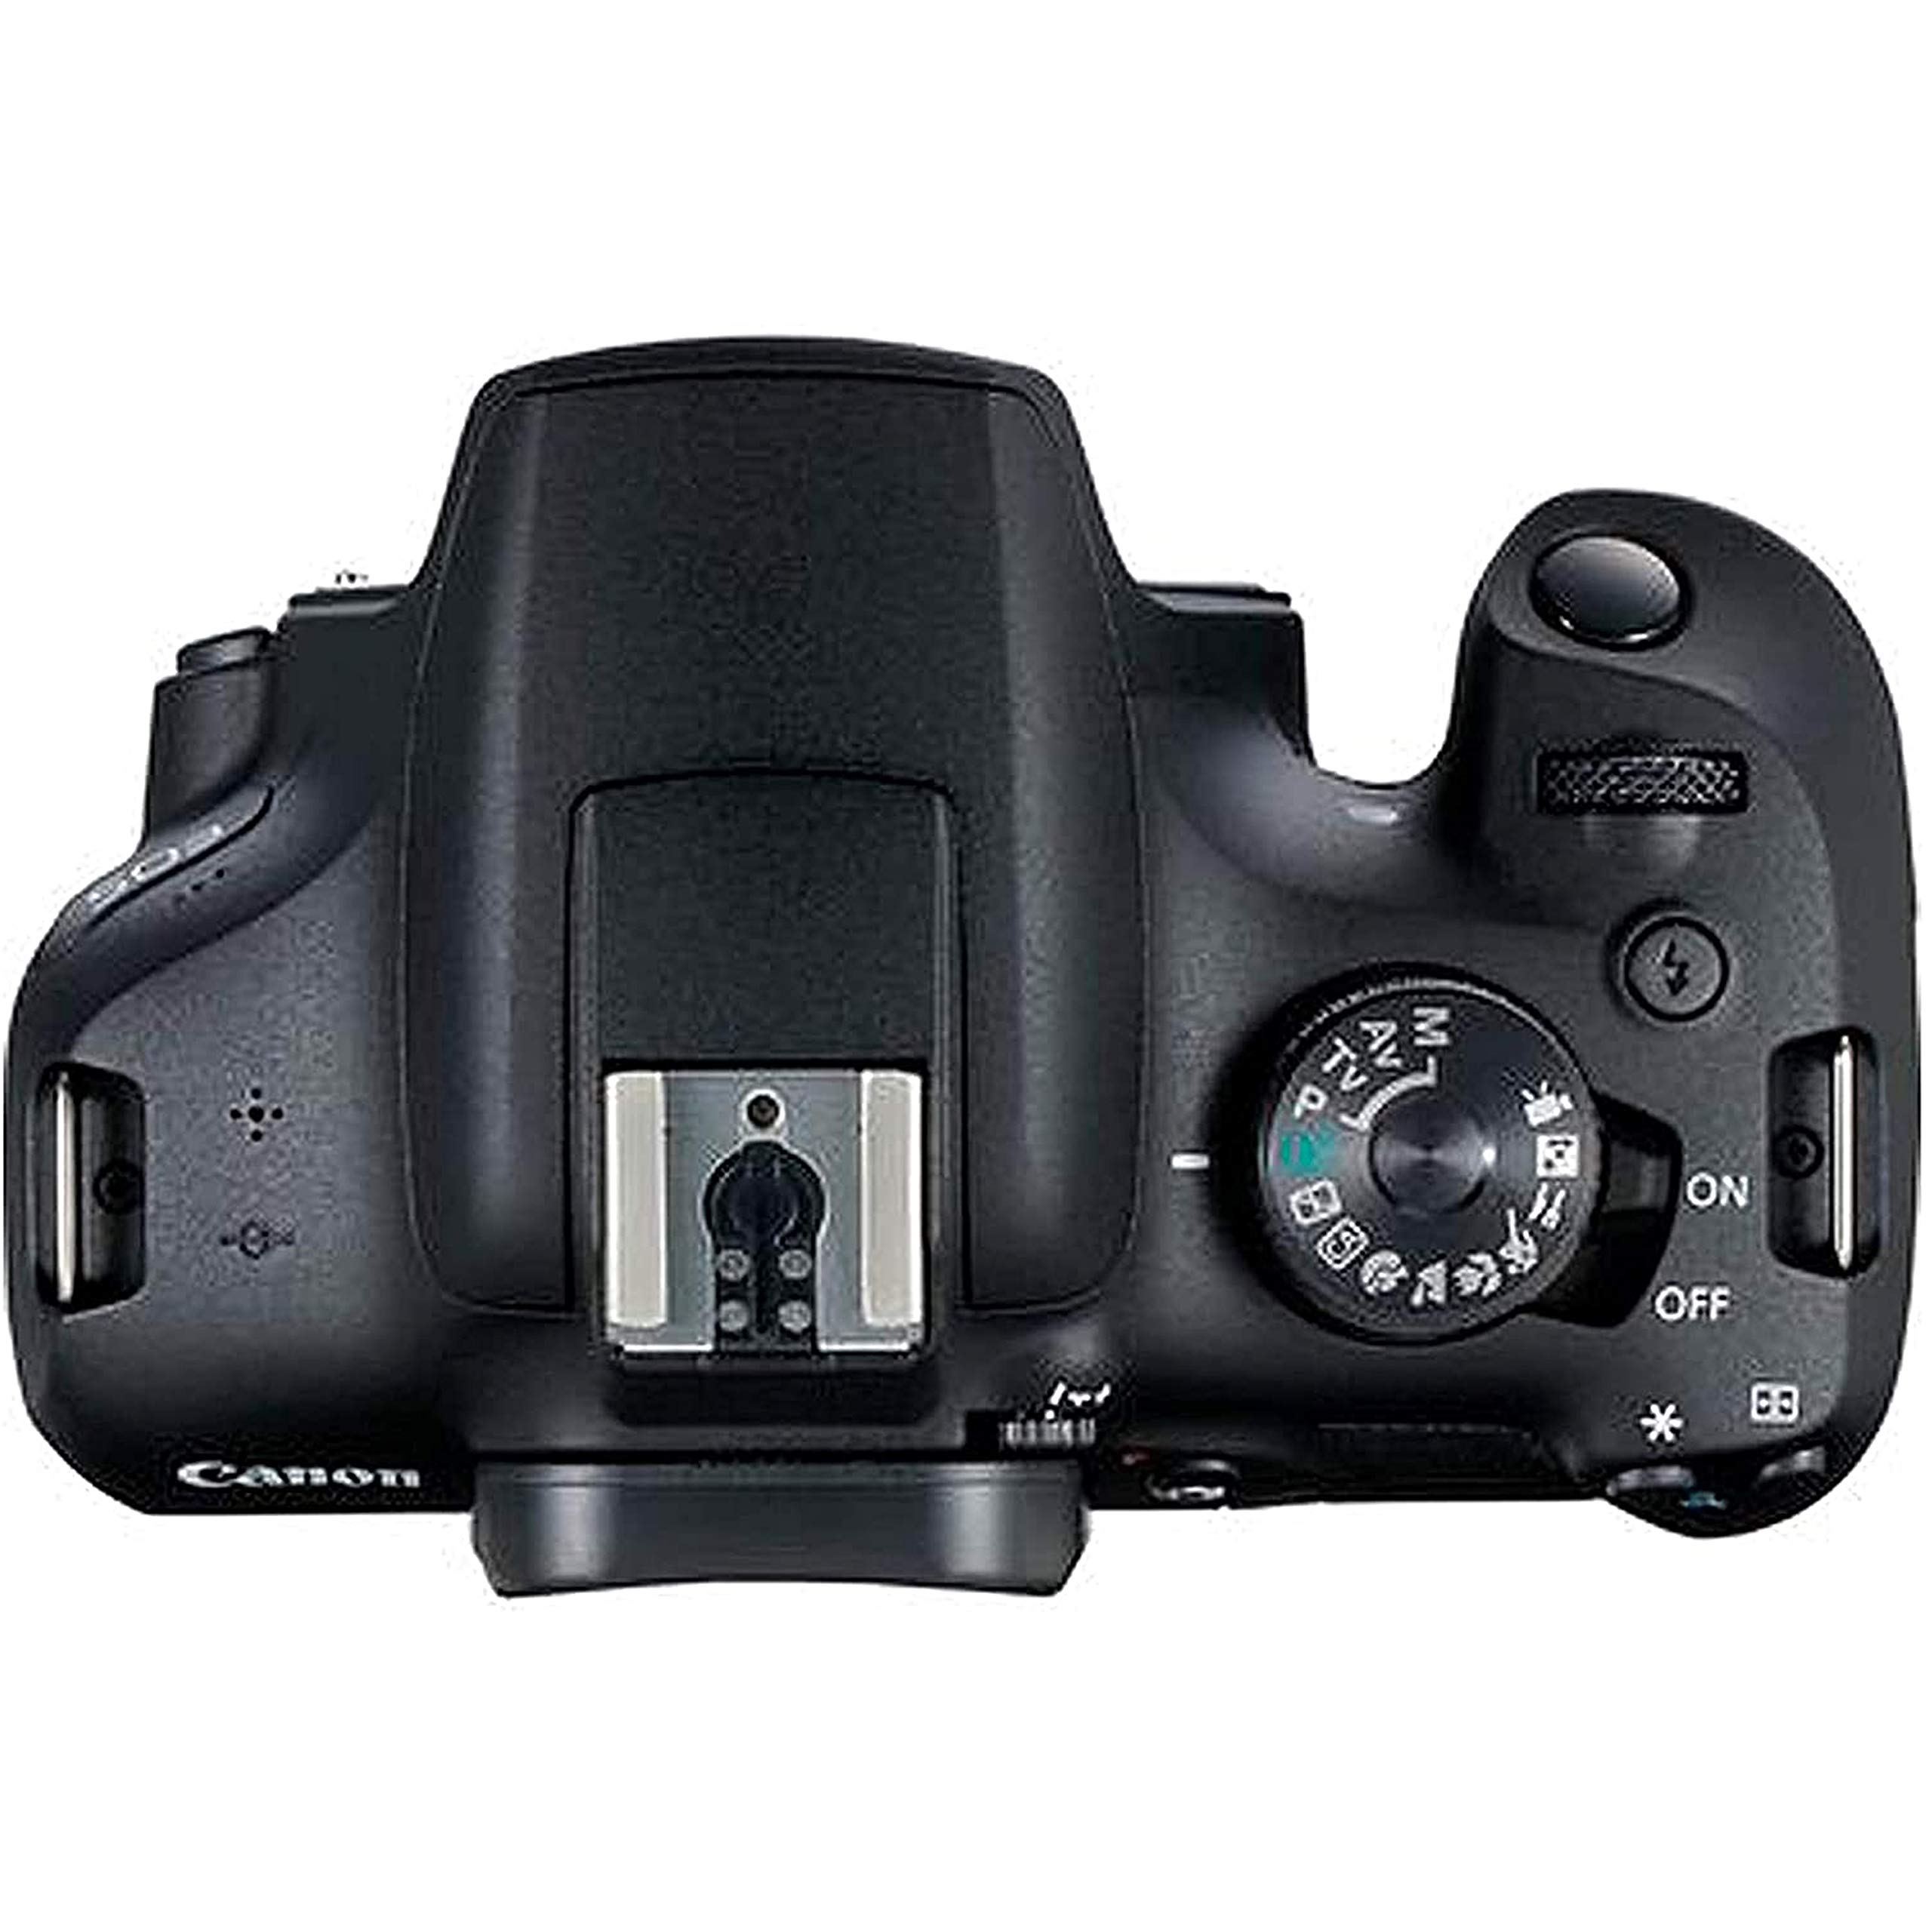 Canon EOS Rebel T7 DSLR Camera Bundle with 18-55mm Lens | Built-in Wi-Fi|24.1 MP CMOS Sensor | |DIGIC 4+ Image Processor and Full HD Videos + 64GB Memory(17pcs)